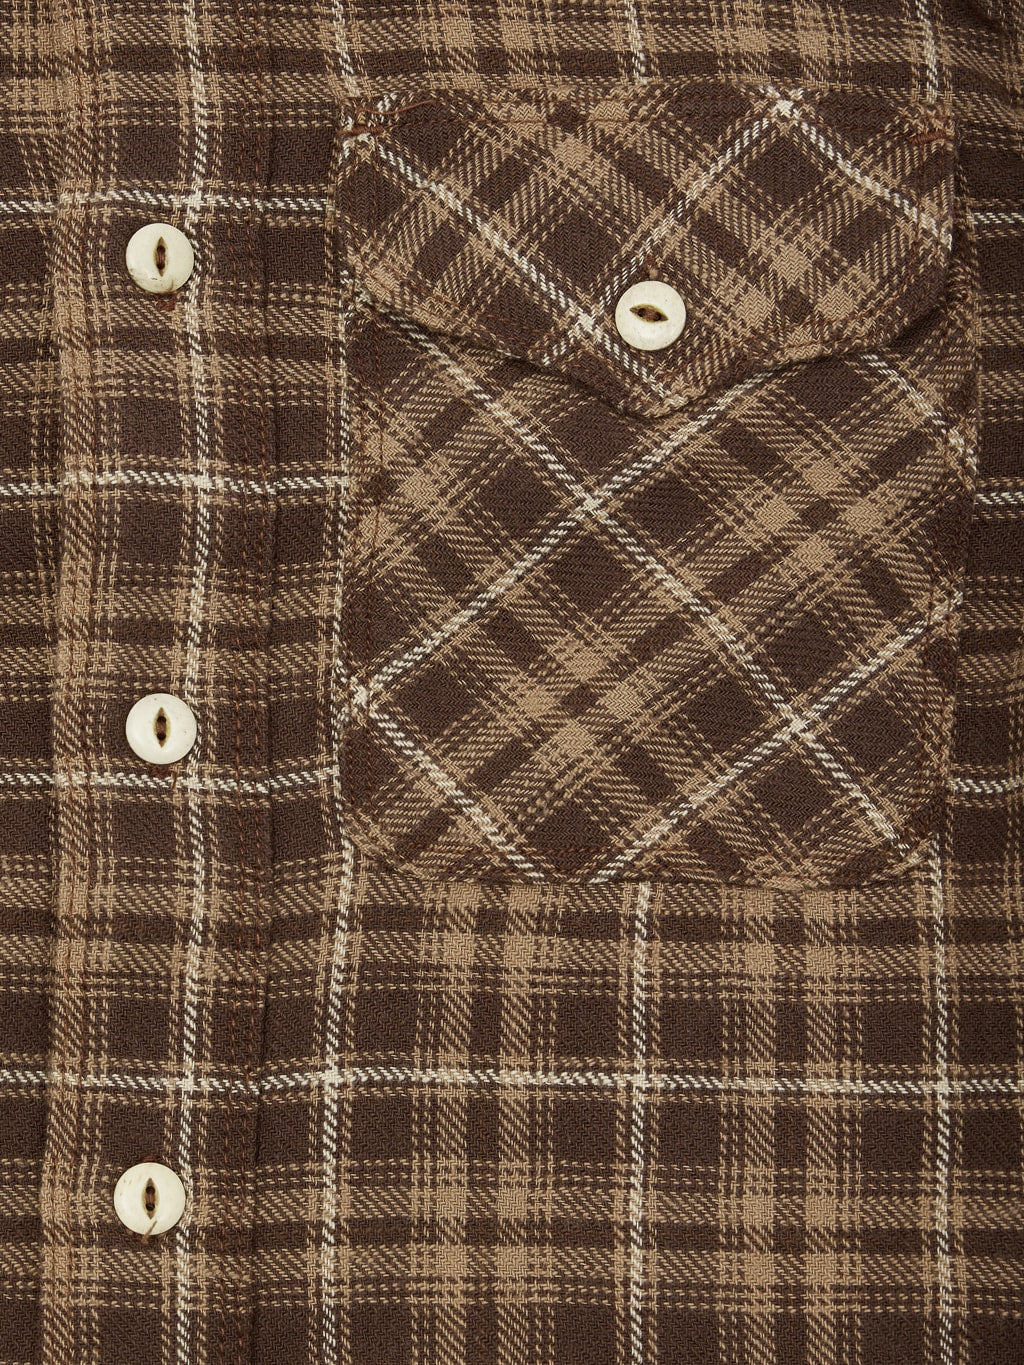 Freenote Cloth Wells Shirt Brown chest pocket